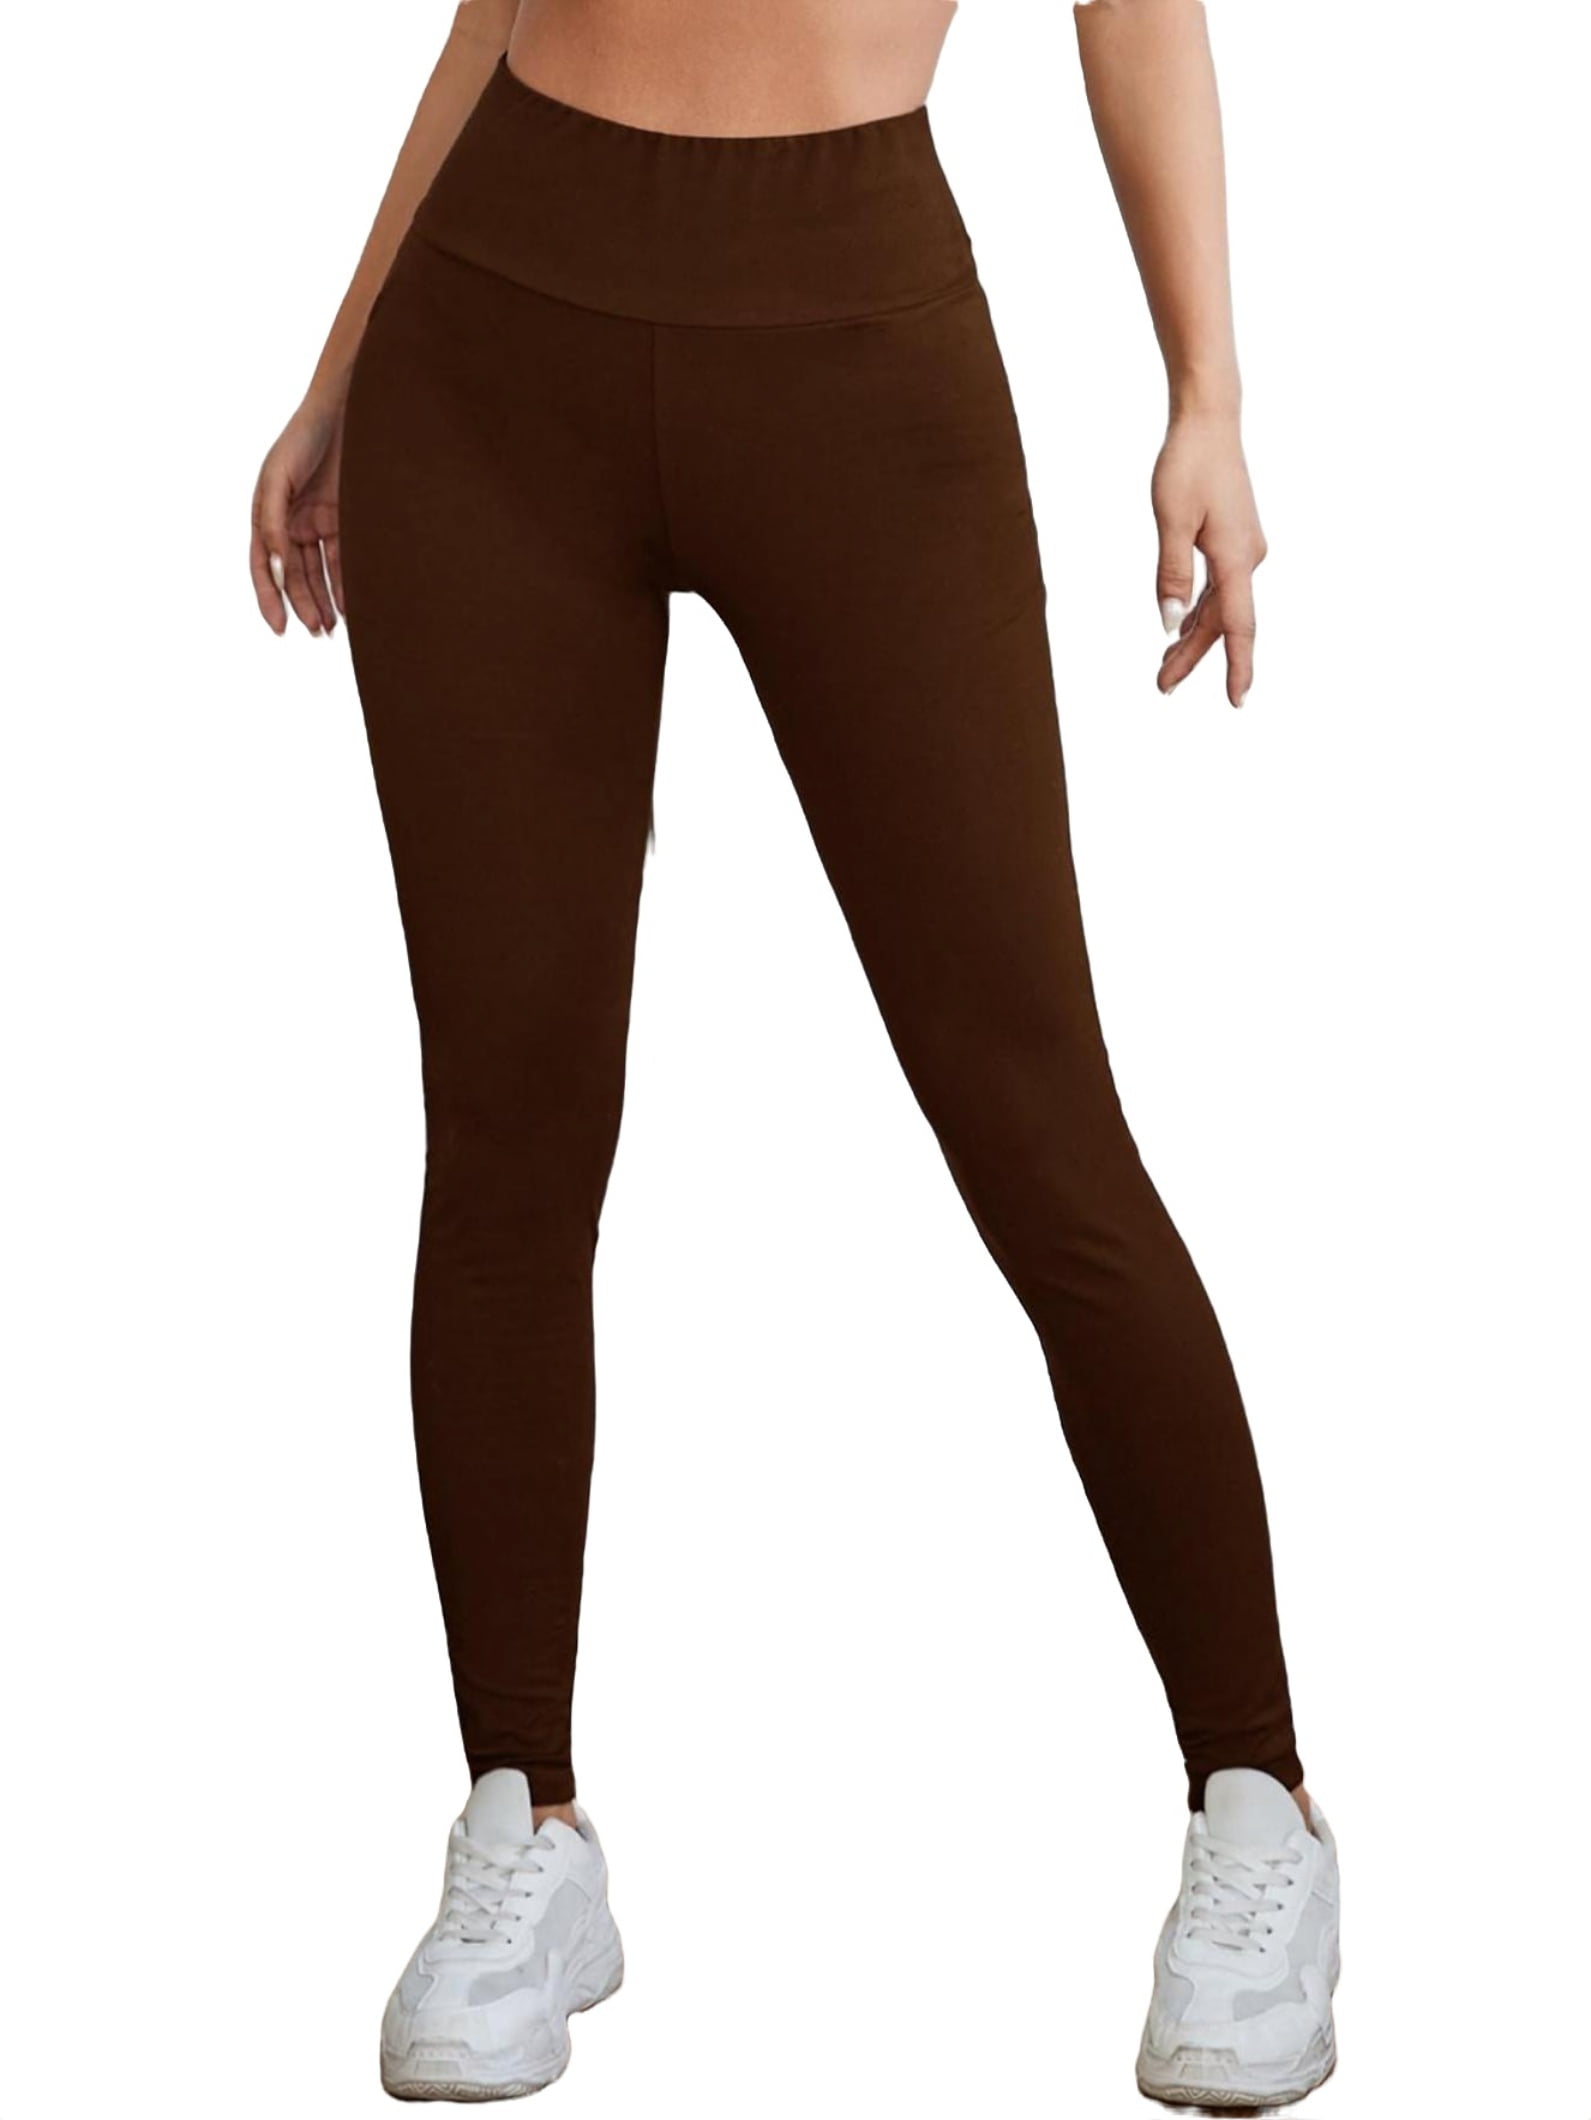 Elastic leggings curvy in dark brown, 6.99€ | Celestino